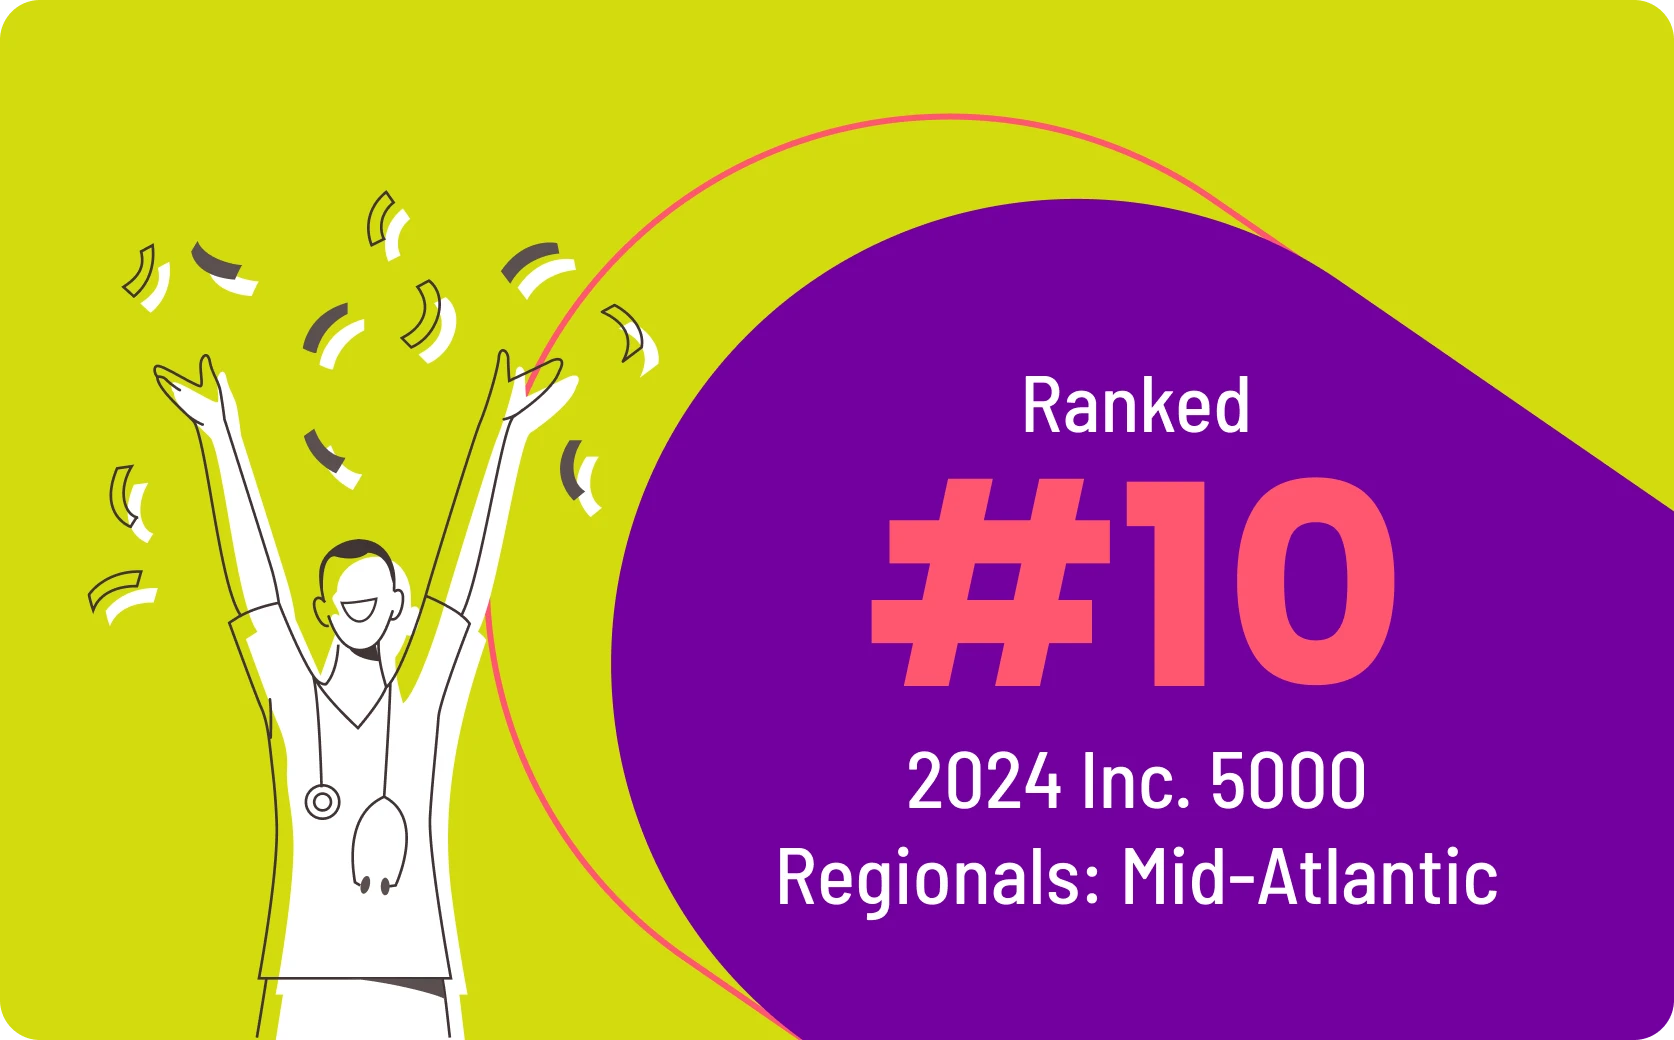 Ranked #10 2024 Inc. 5000 Regionals: Mid-Atlantic